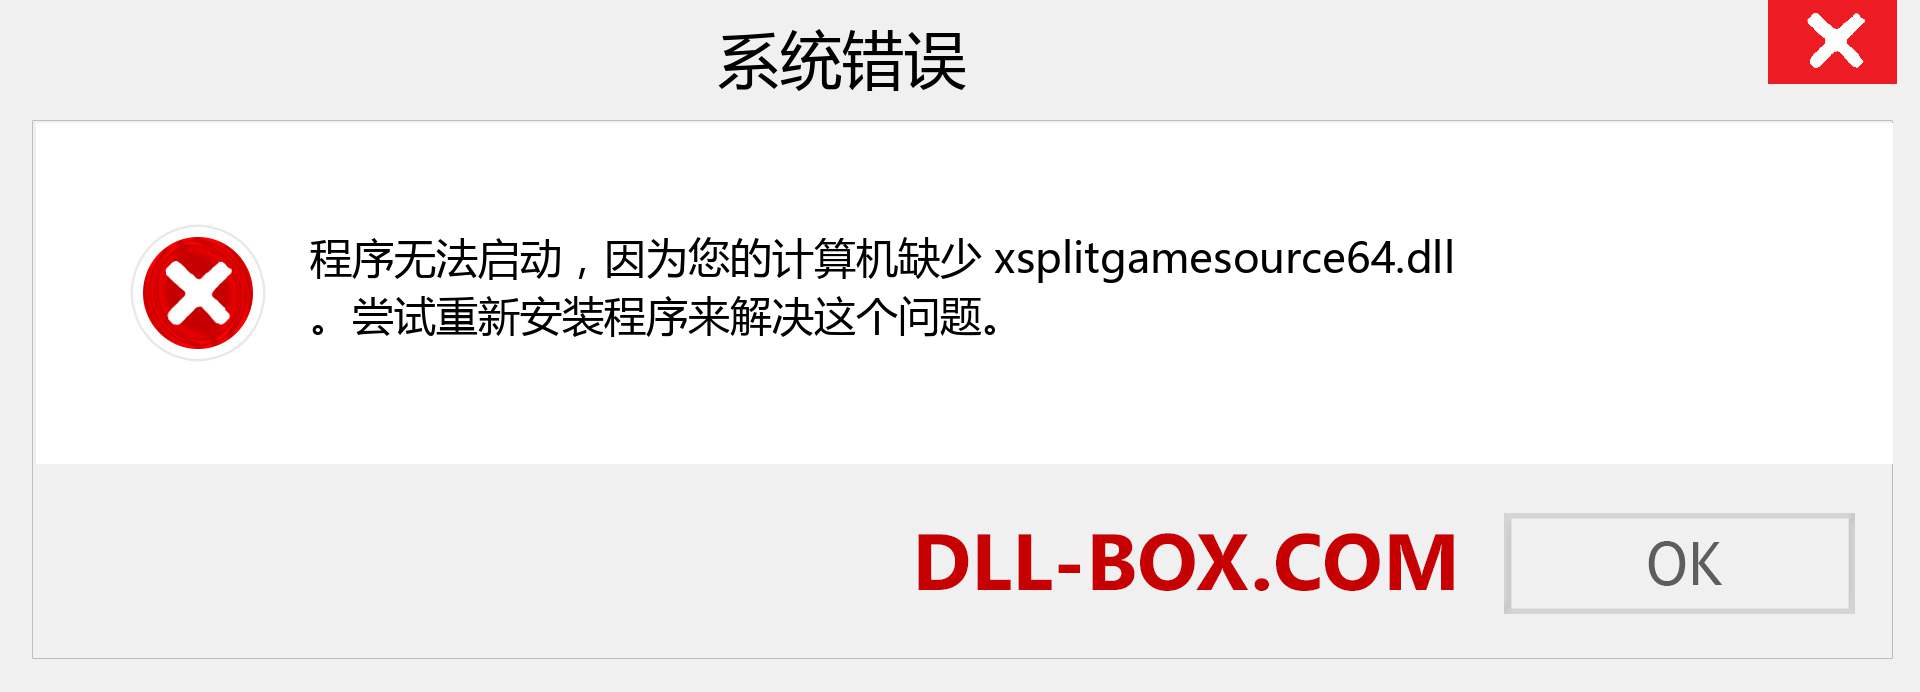 xsplitgamesource64.dll 文件丢失？。 适用于 Windows 7、8、10 的下载 - 修复 Windows、照片、图像上的 xsplitgamesource64 dll 丢失错误